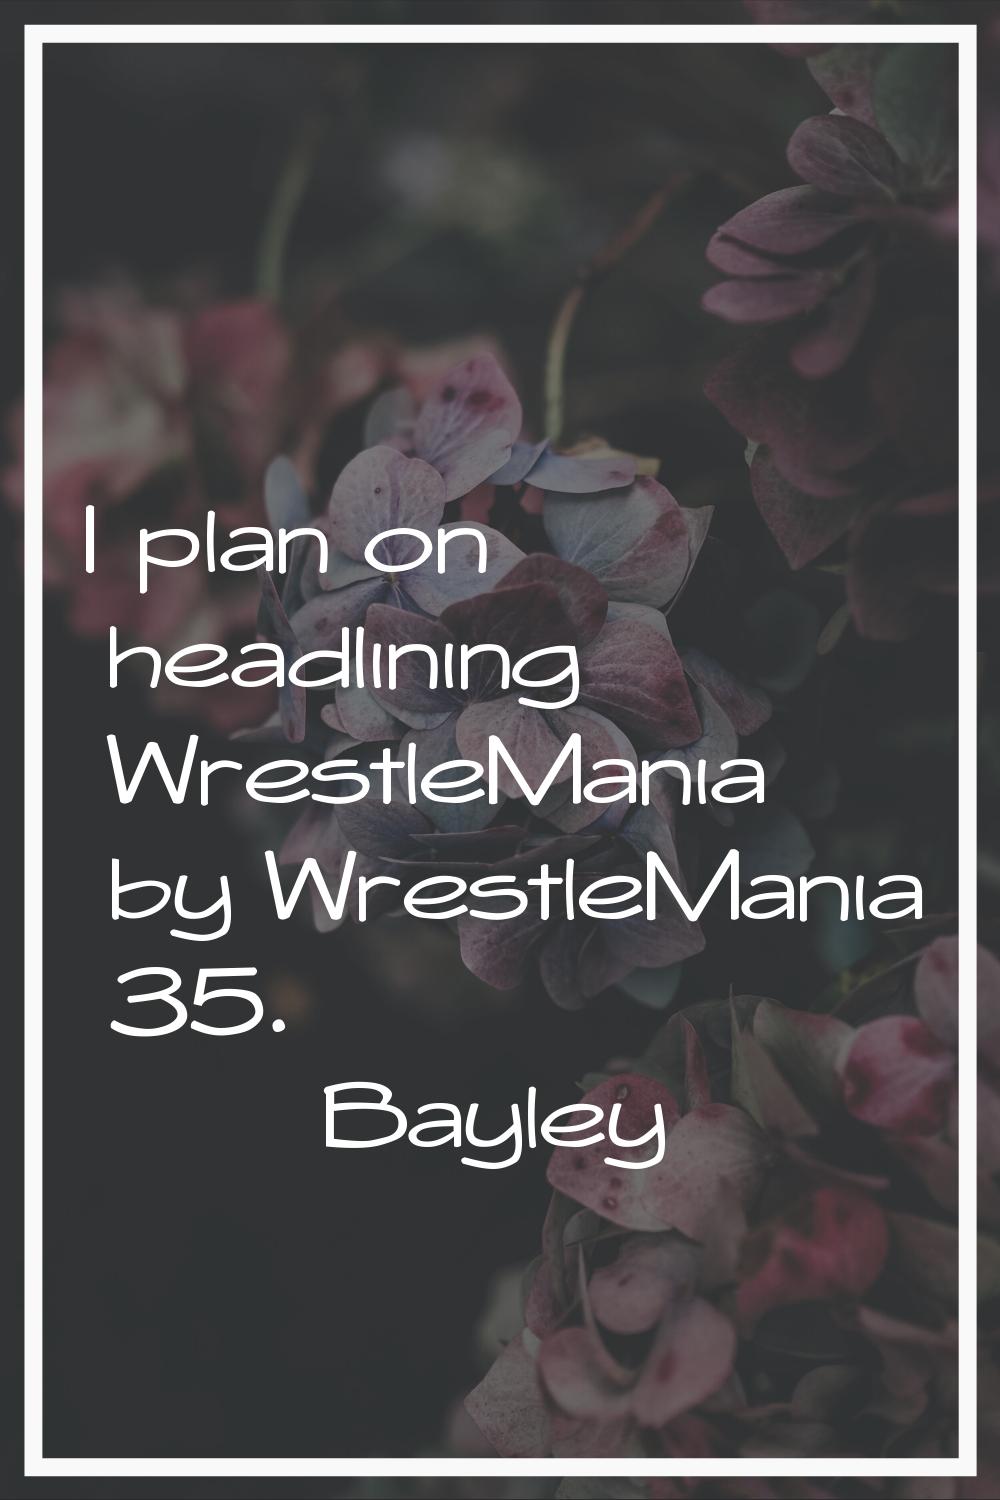 I plan on headlining WrestleMania by WrestleMania 35.